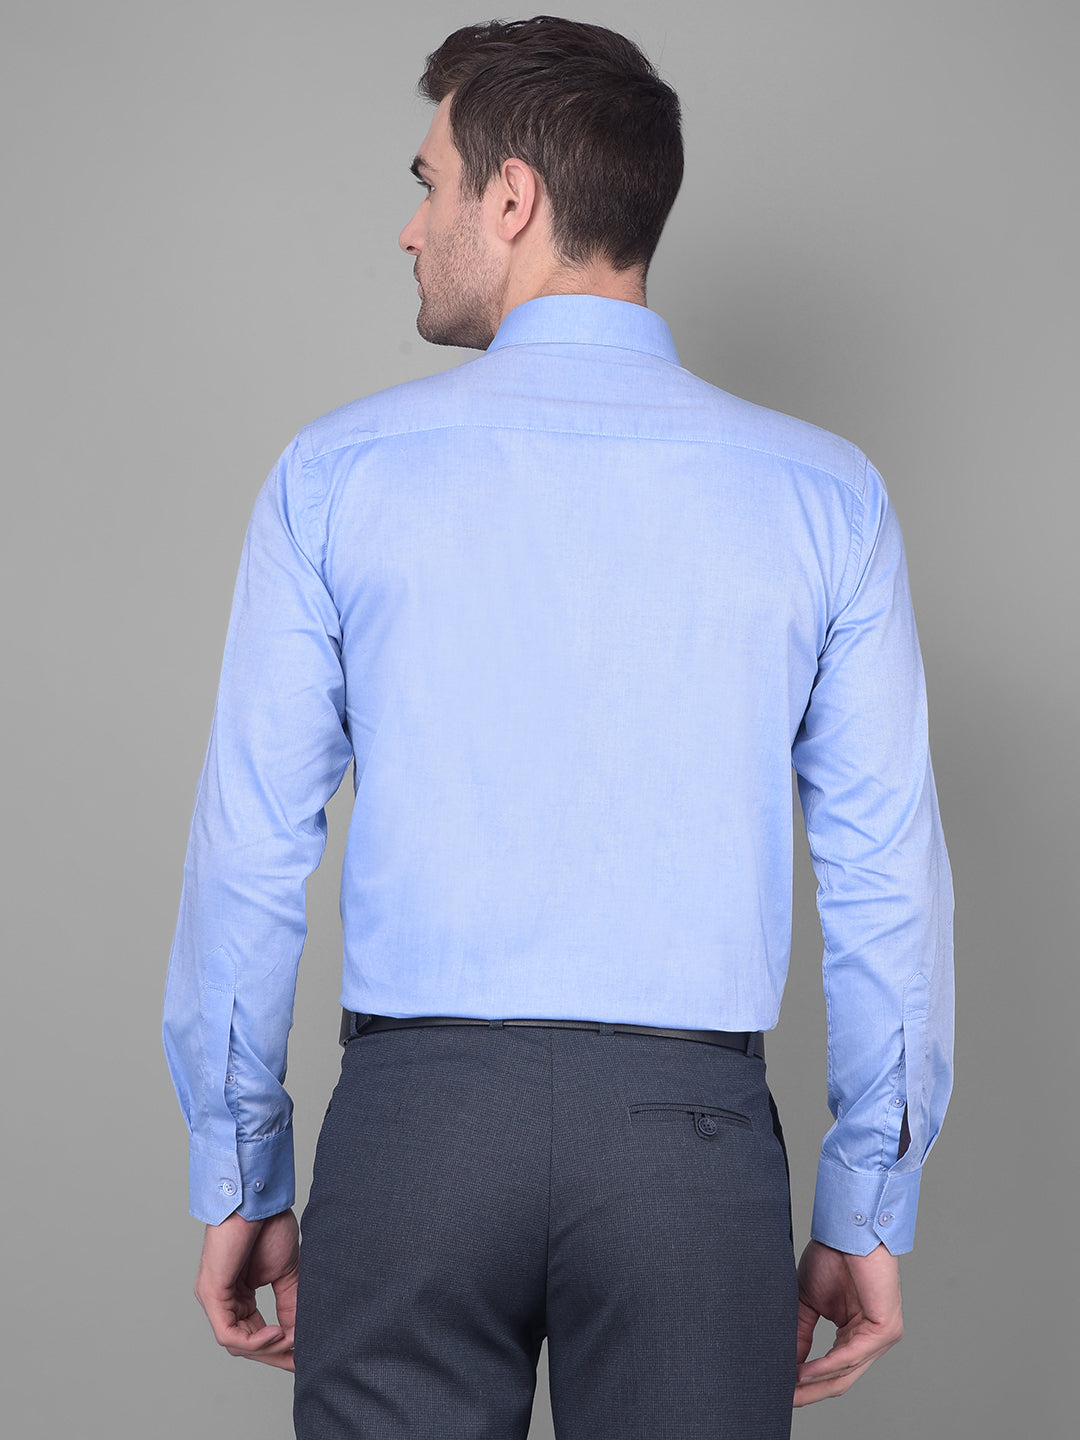 cobb solid medium blue smart fit formal shirt